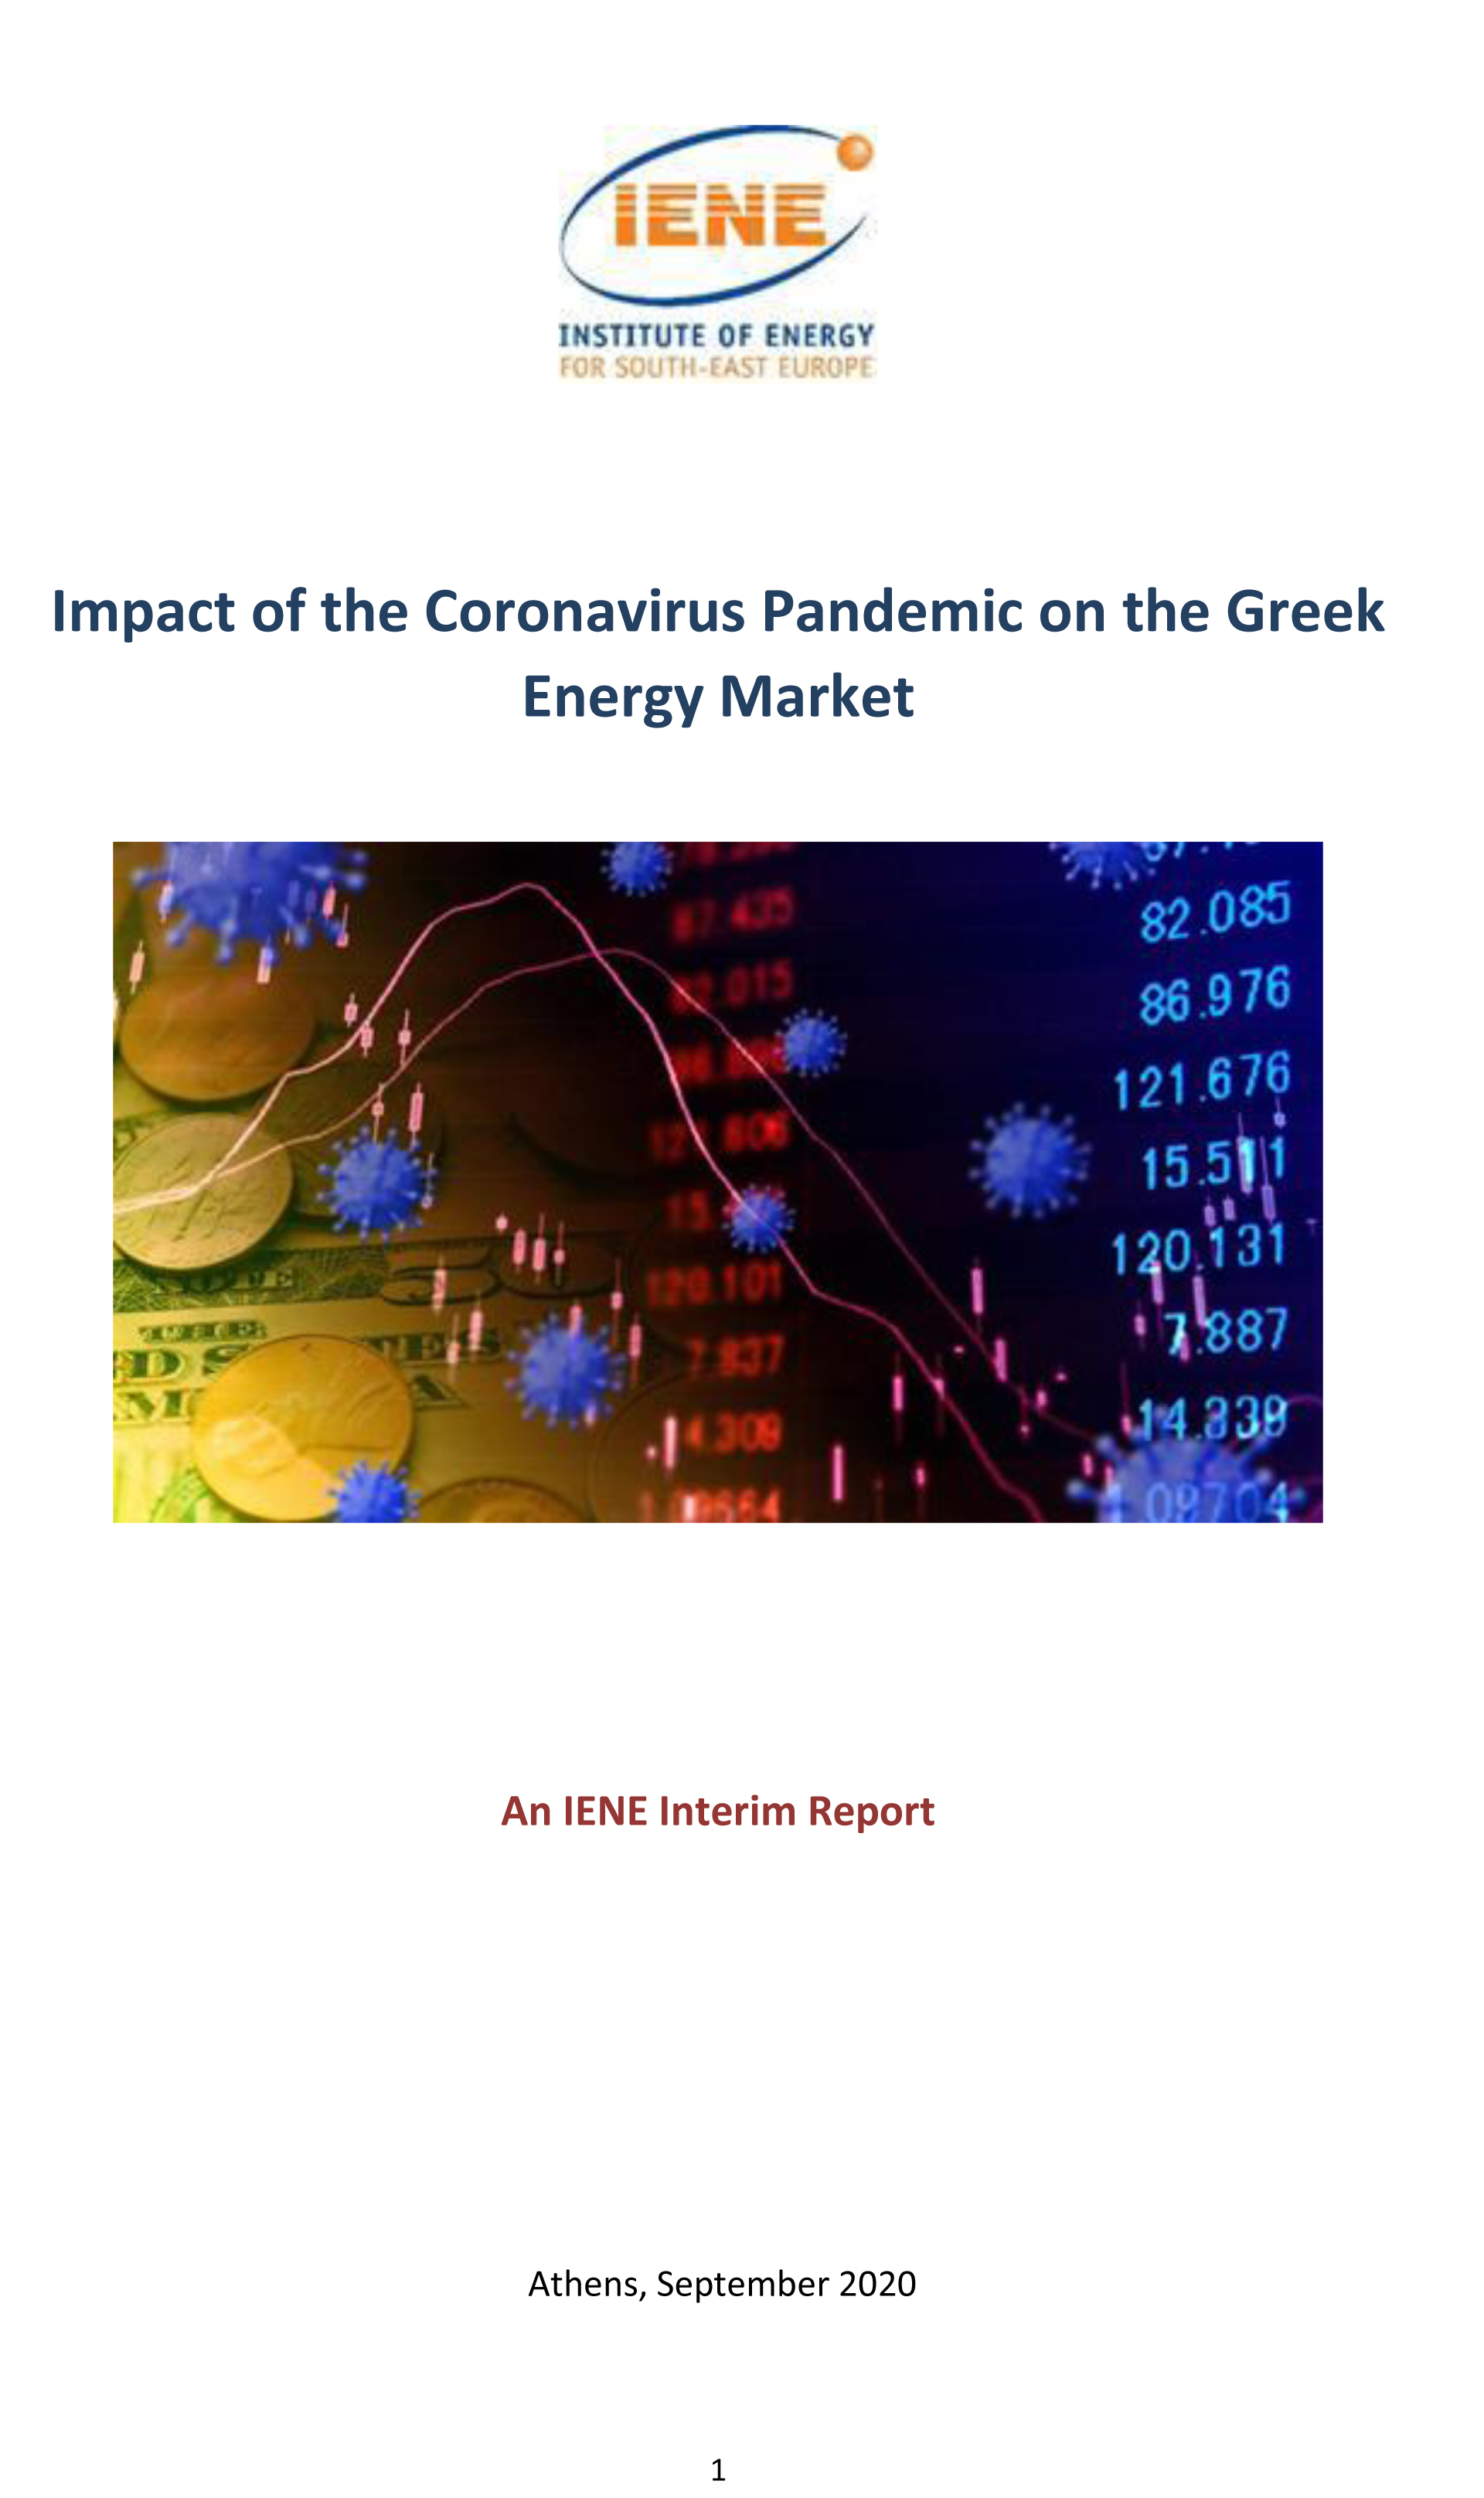 IENE Released Interim Report on the impact of the Coronavirus Pandemic on Greece’s Energy Market